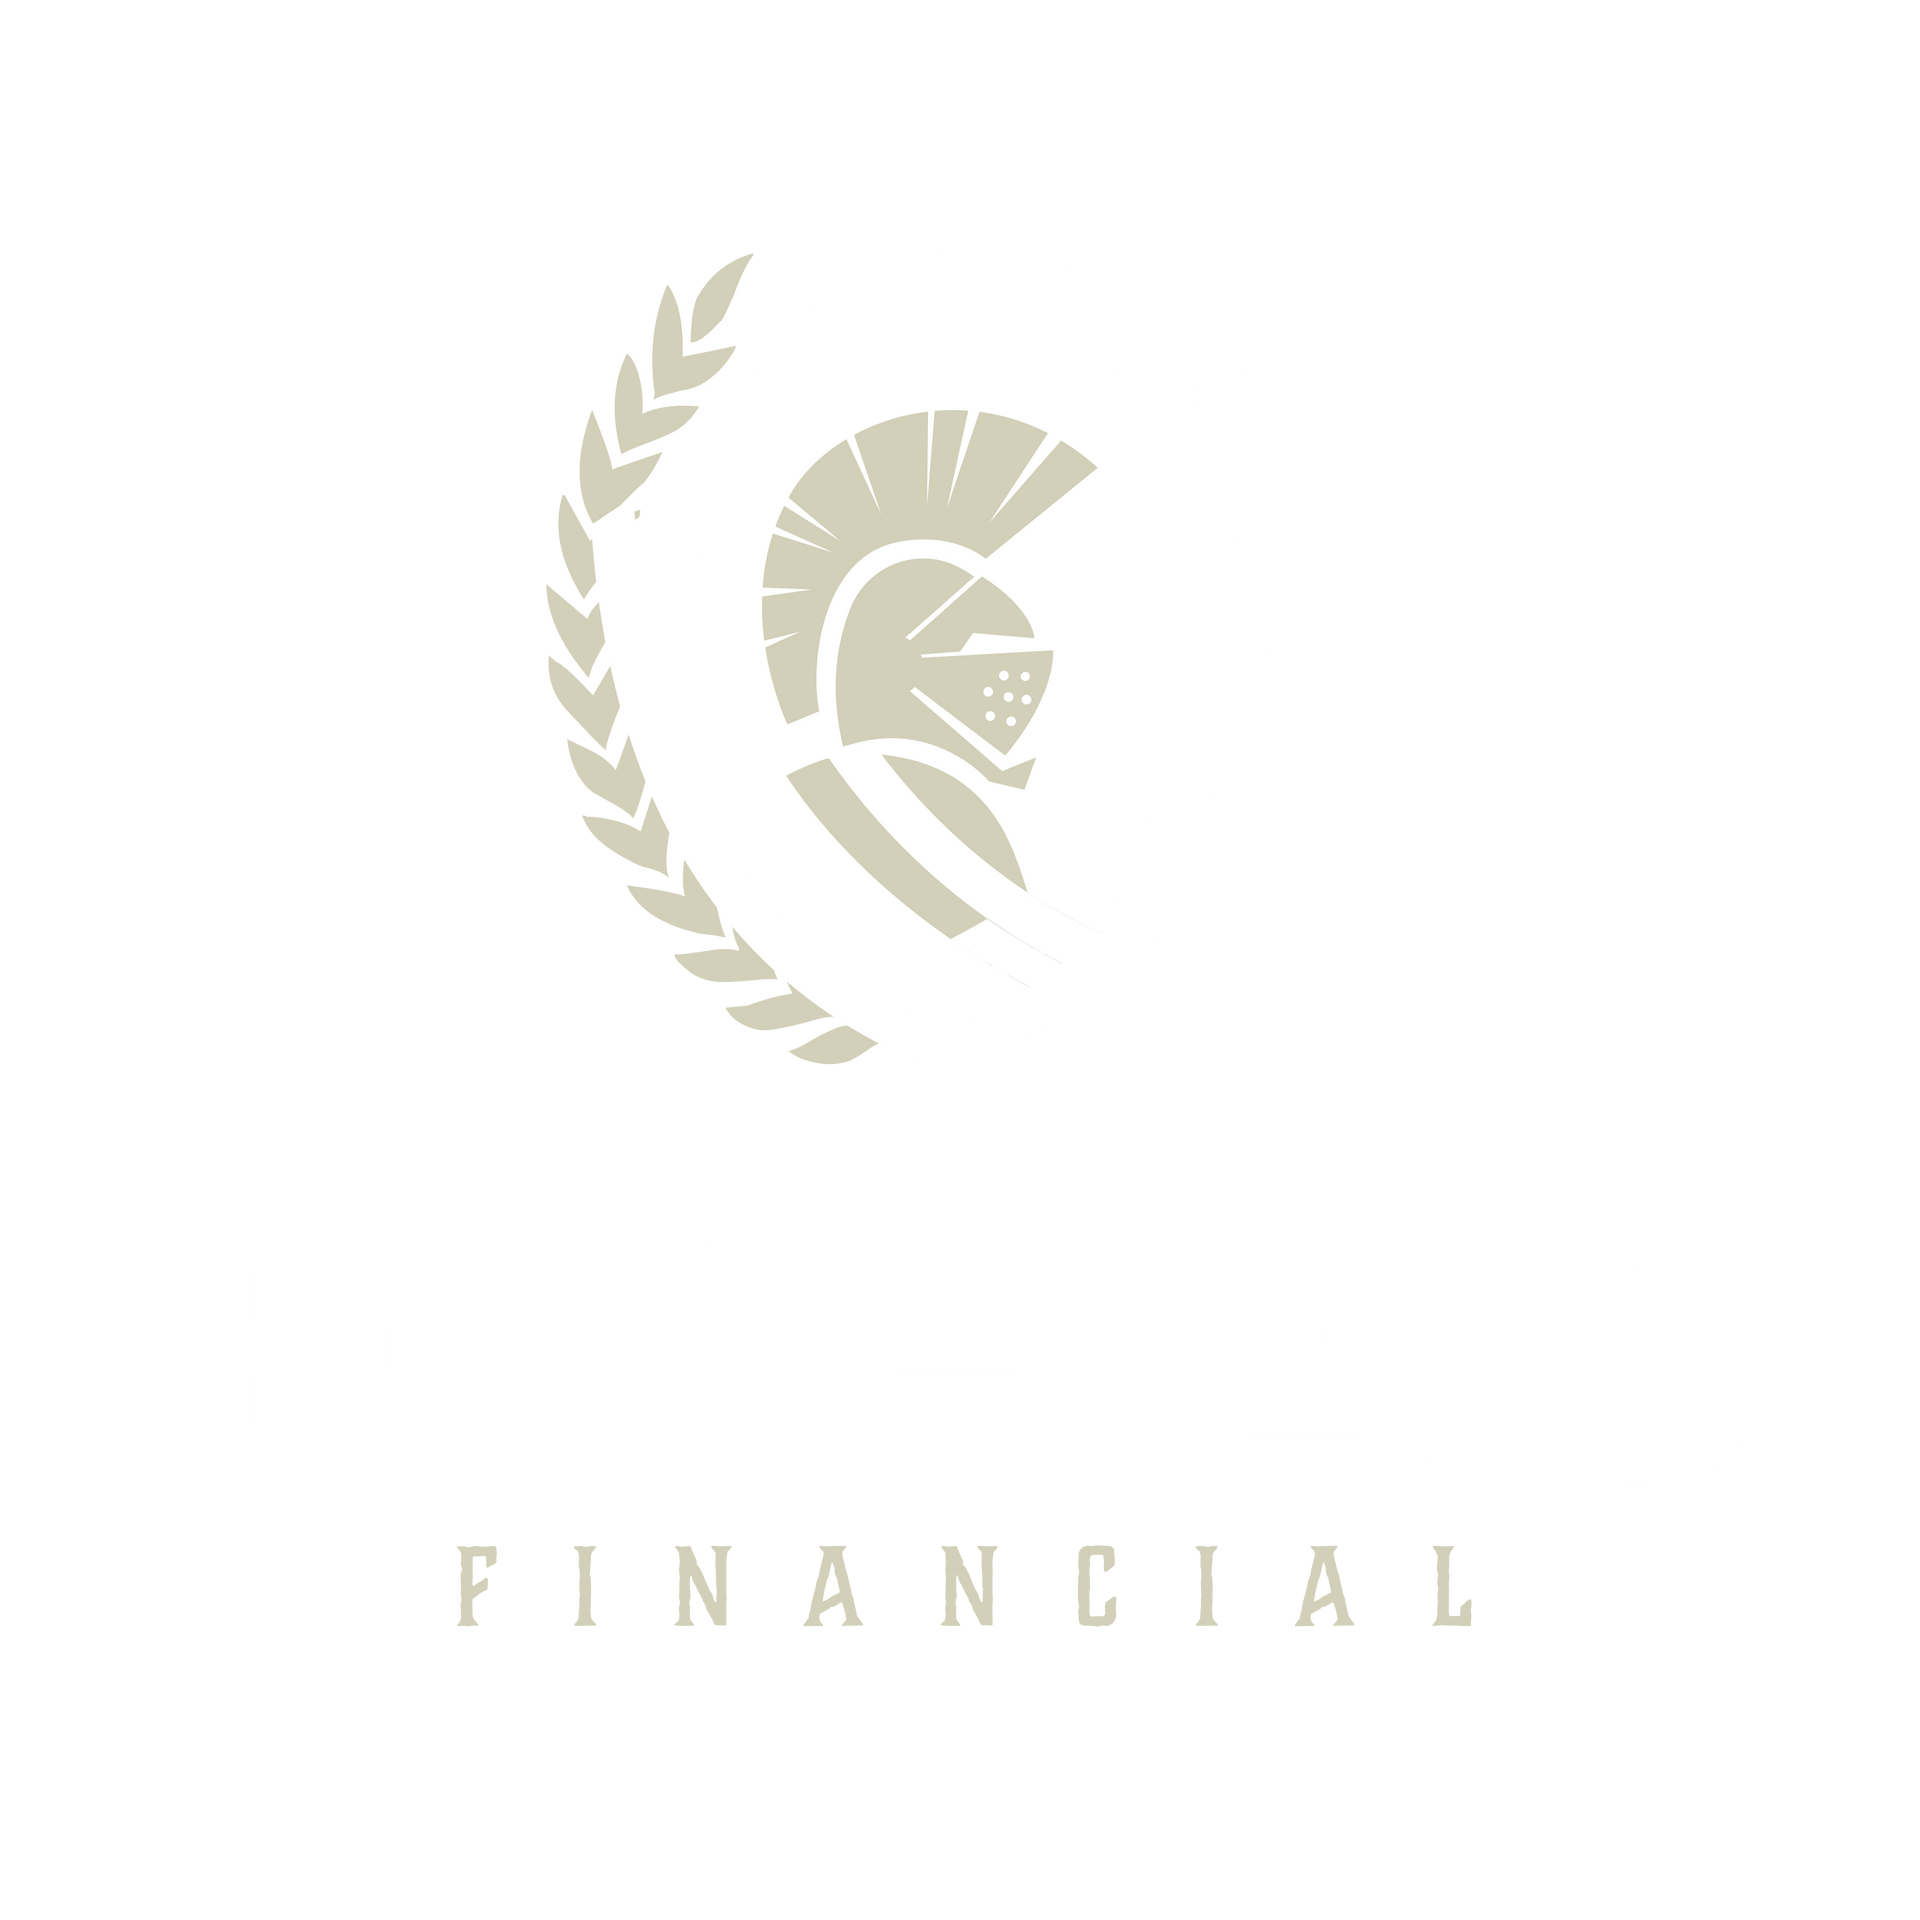 EPHAS Financial